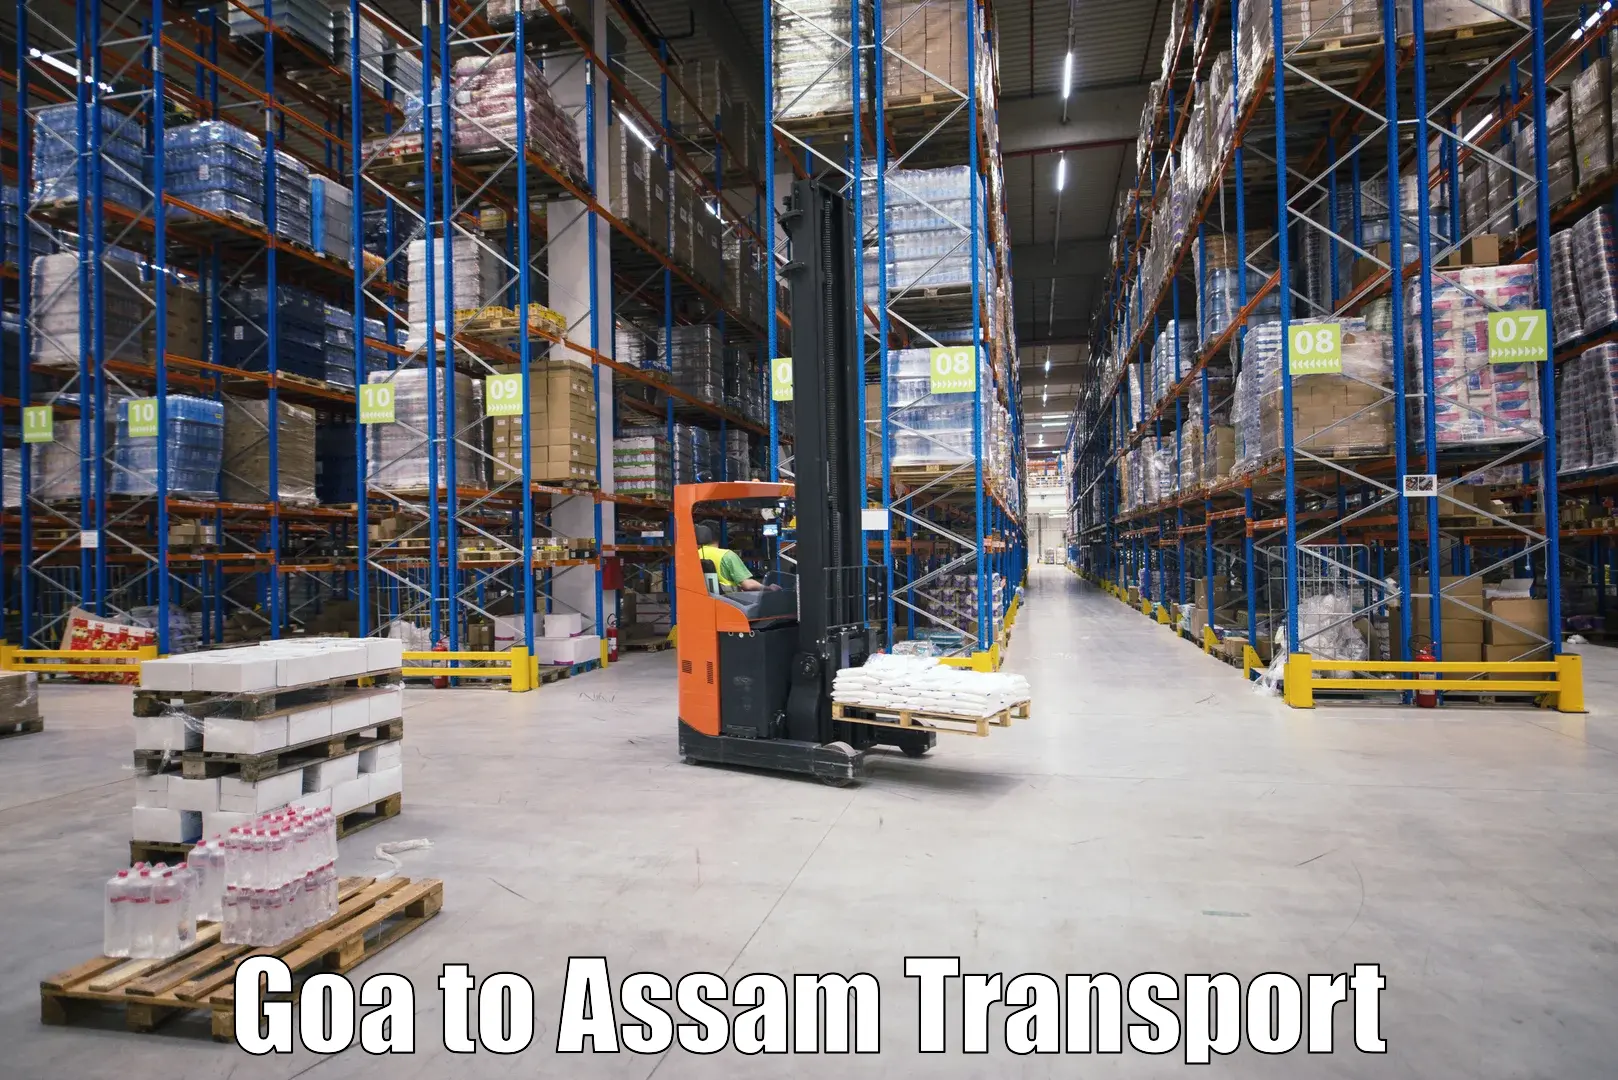 Transport shared services Goa to Guwahati